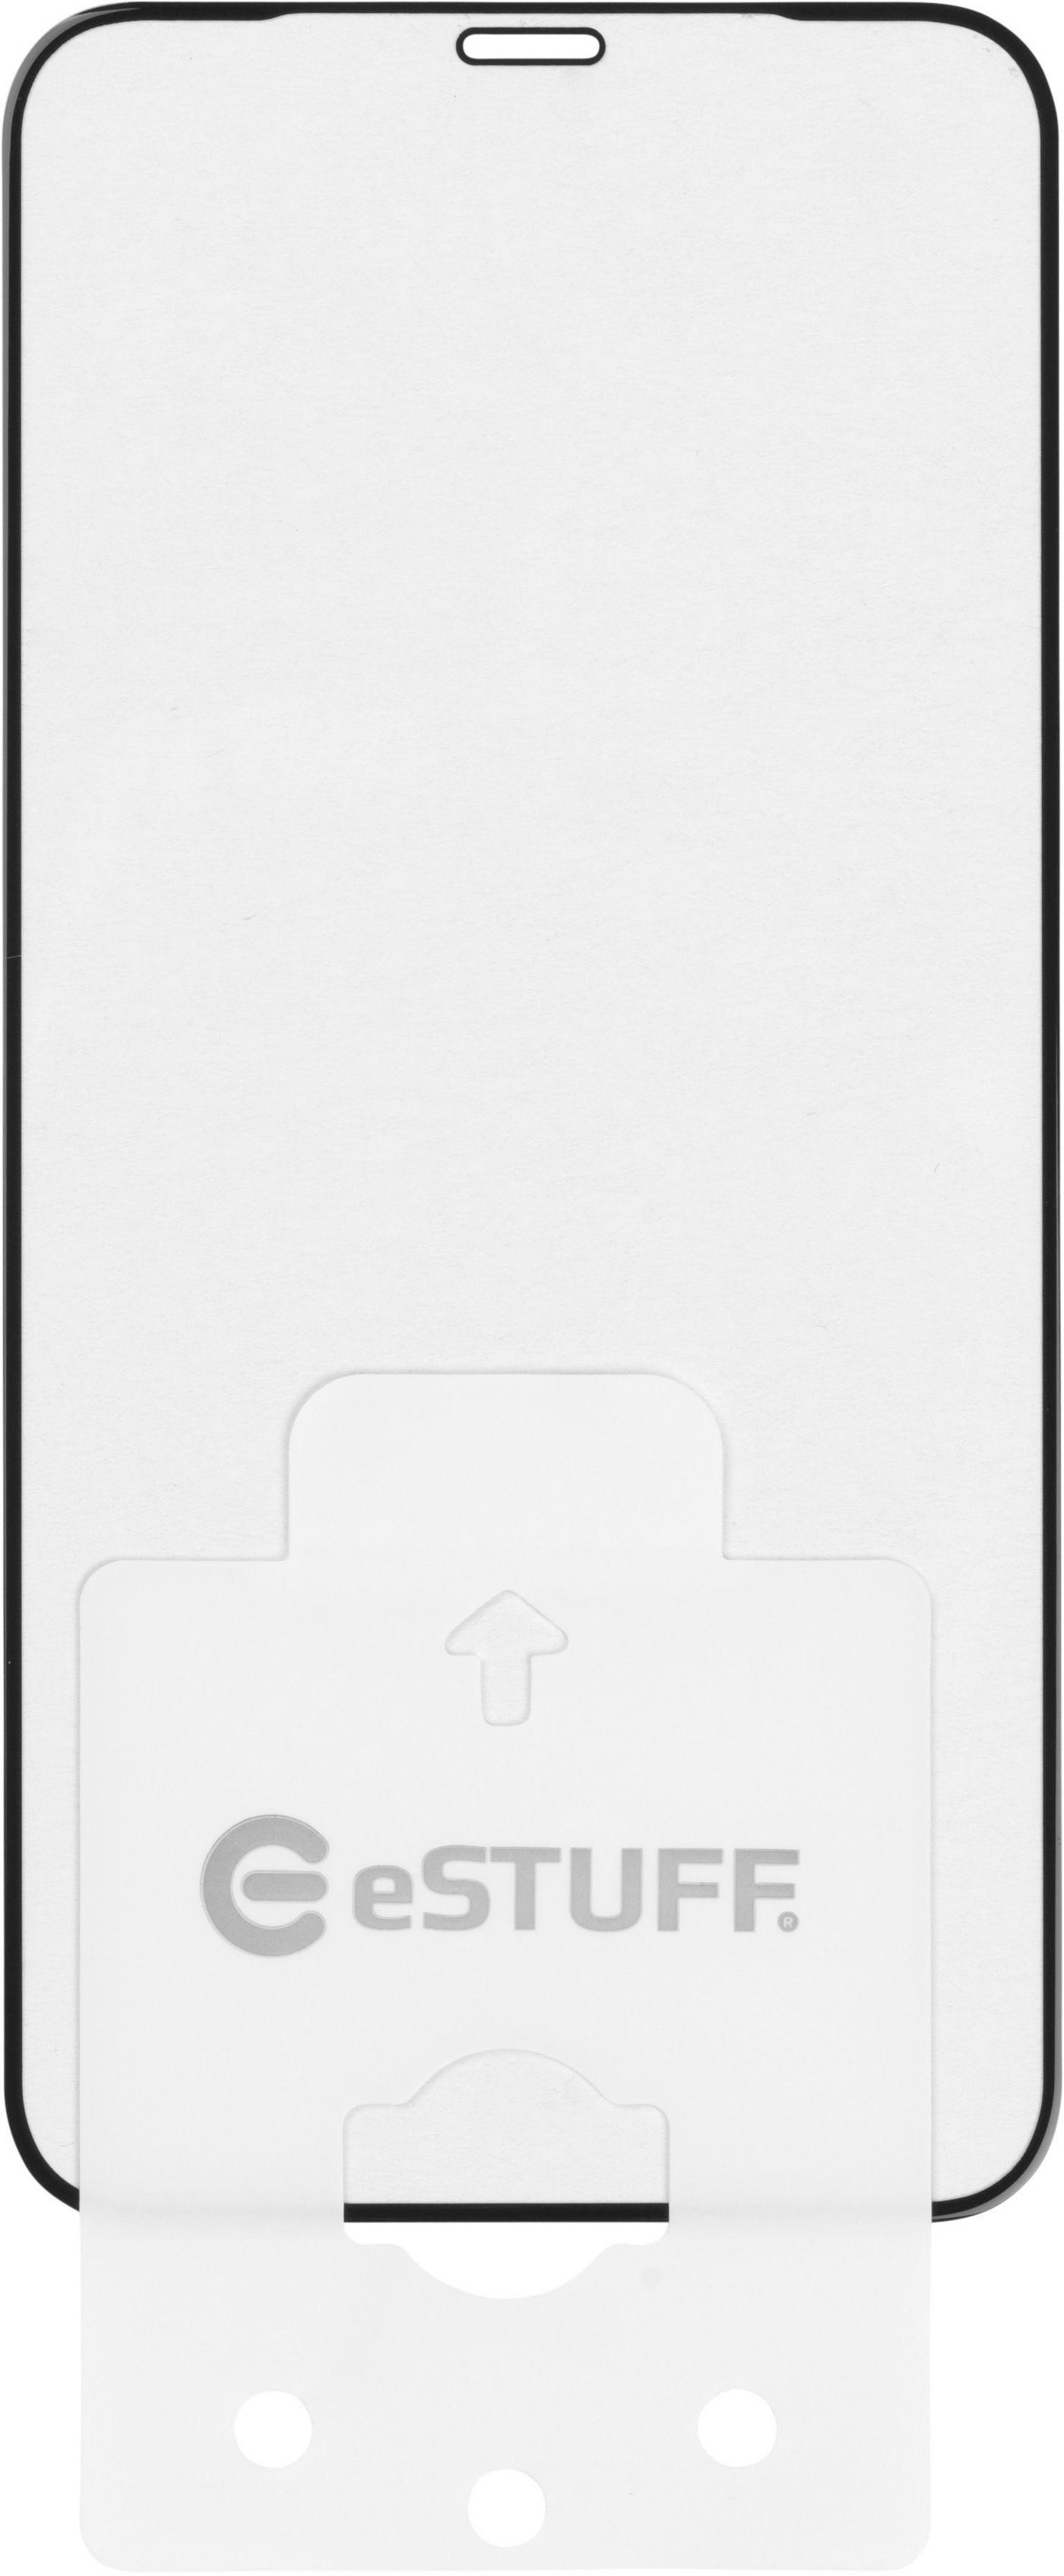 eSTUFF Screen Protector - 10 pcs BULK Pack - for iPhone SE...